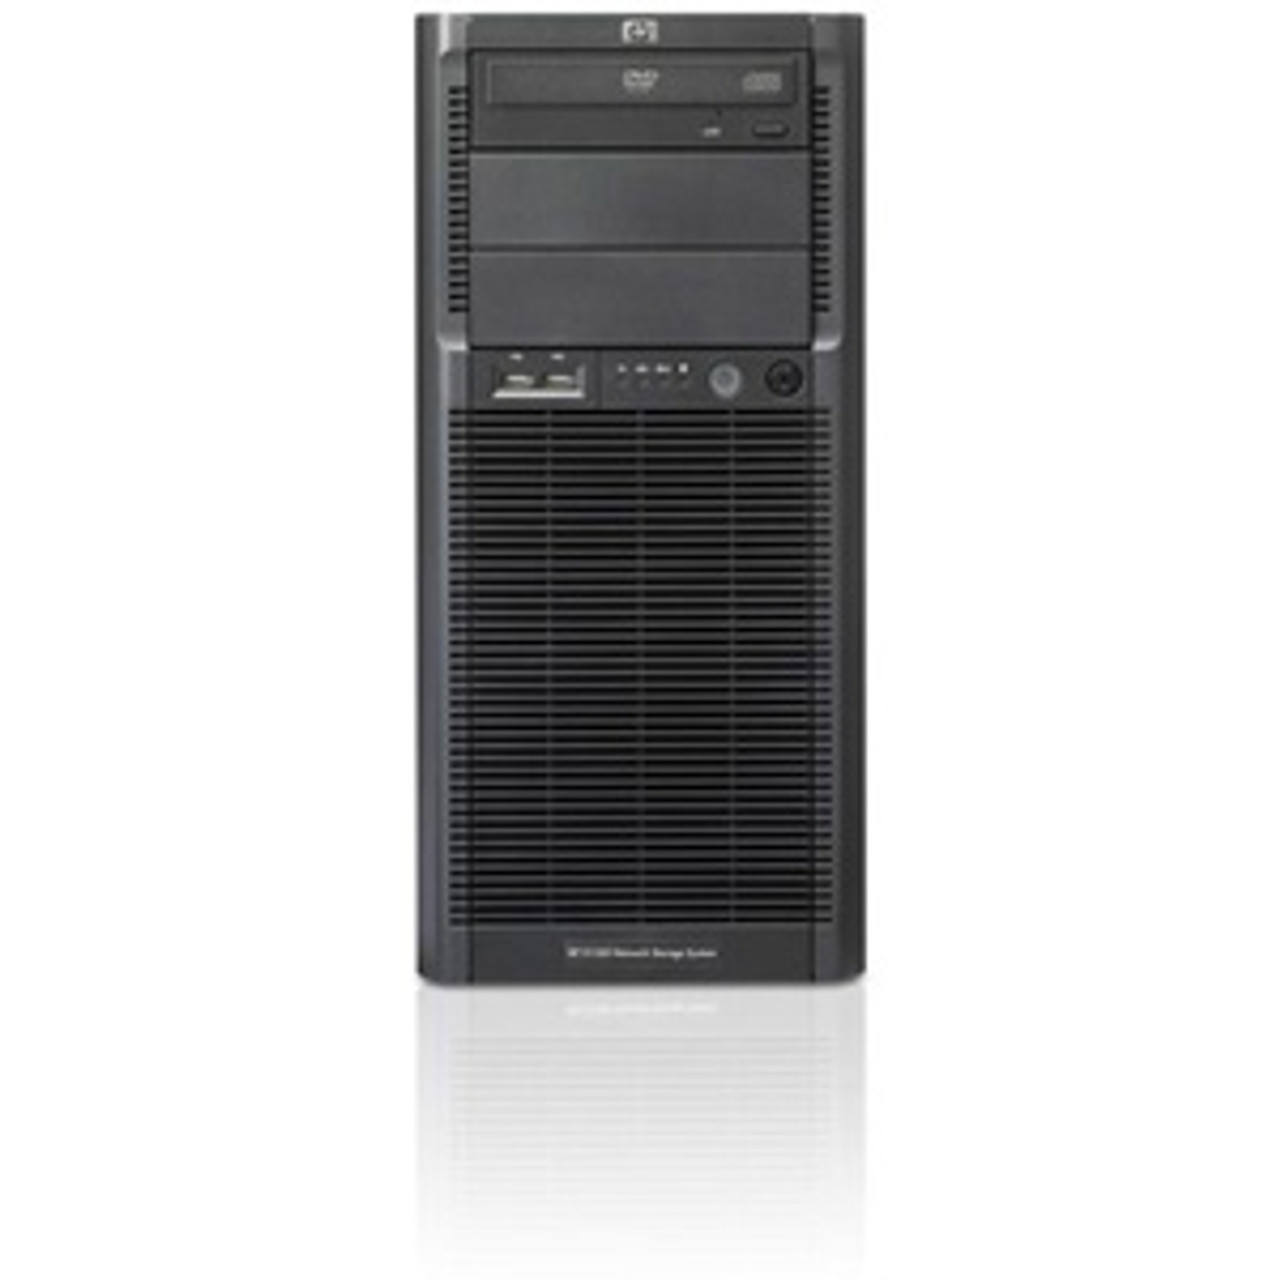 BK772A - HP StorageWorks X1500 Network Storage Server 1 x Intel Xeon E5503 2 GHz 8 x Total Bays 8 TB HDD (4 x 2 TB) 2 GB RAM RAID Supported 6 x USB Ports